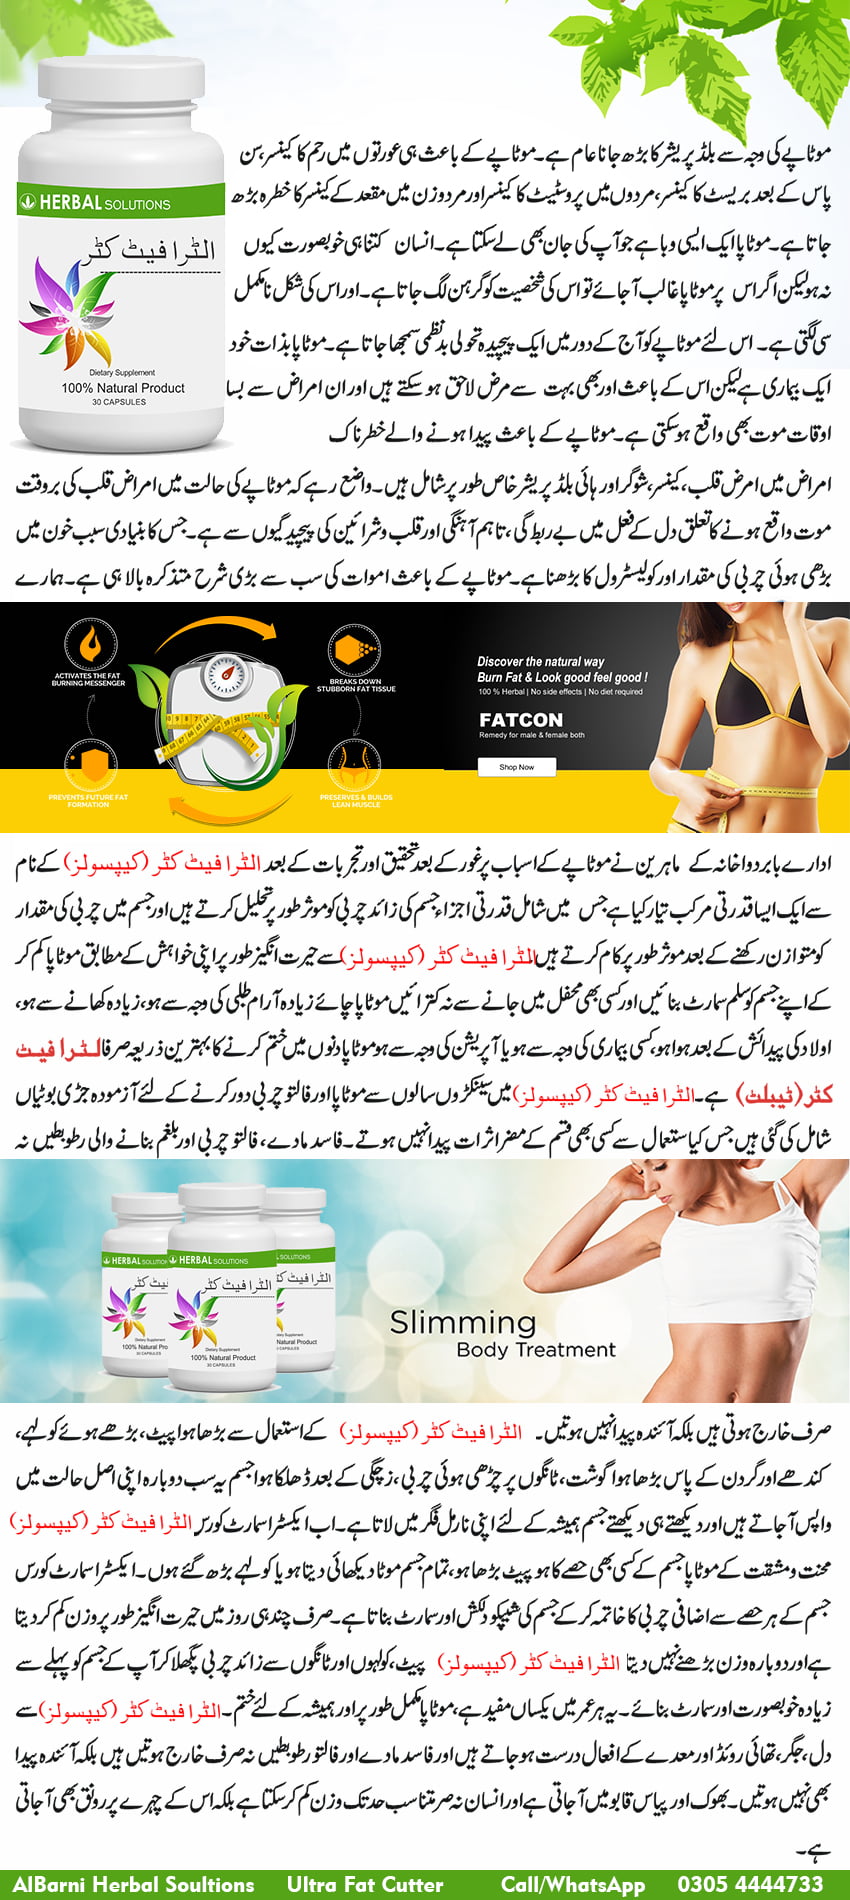 weight loss tablets in Pakistan, best weight loss medicine in Pakistan, best weight loss medicine in Karachi, fat burner supplement in Pakistan, ultra fat cutter price in Pakistan